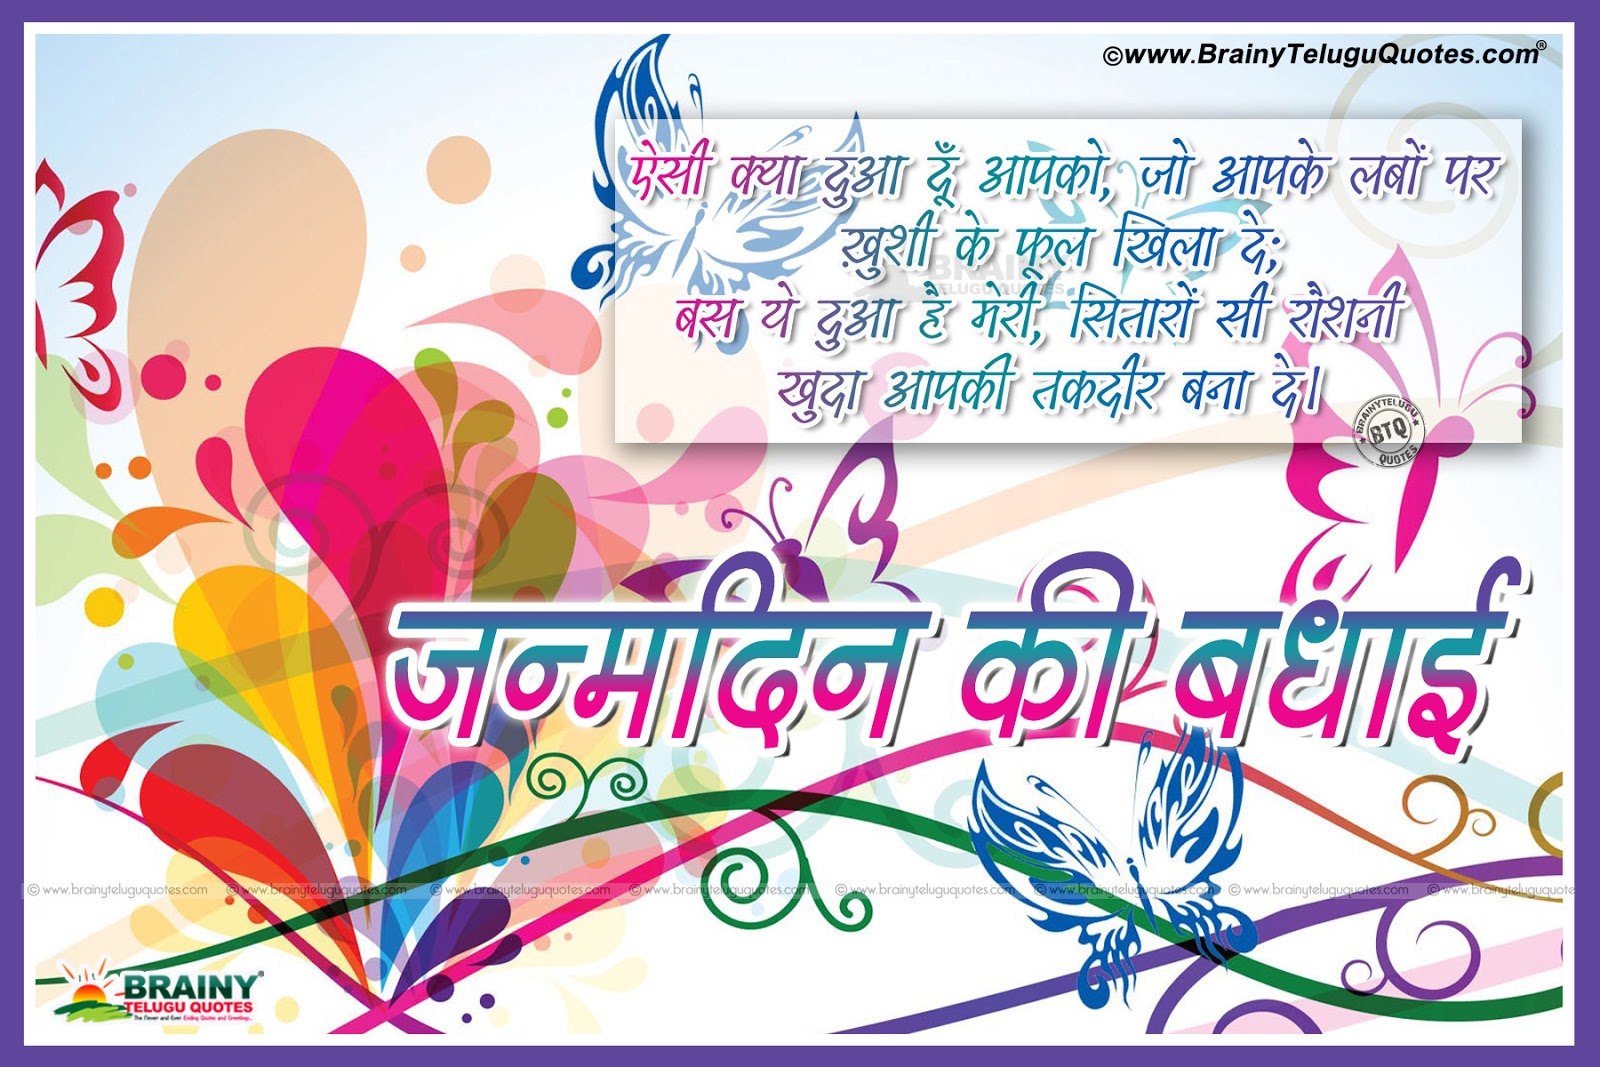 Happy Birthday Wishes Quotes Greetings in Hindi-Janmadin Mubarak